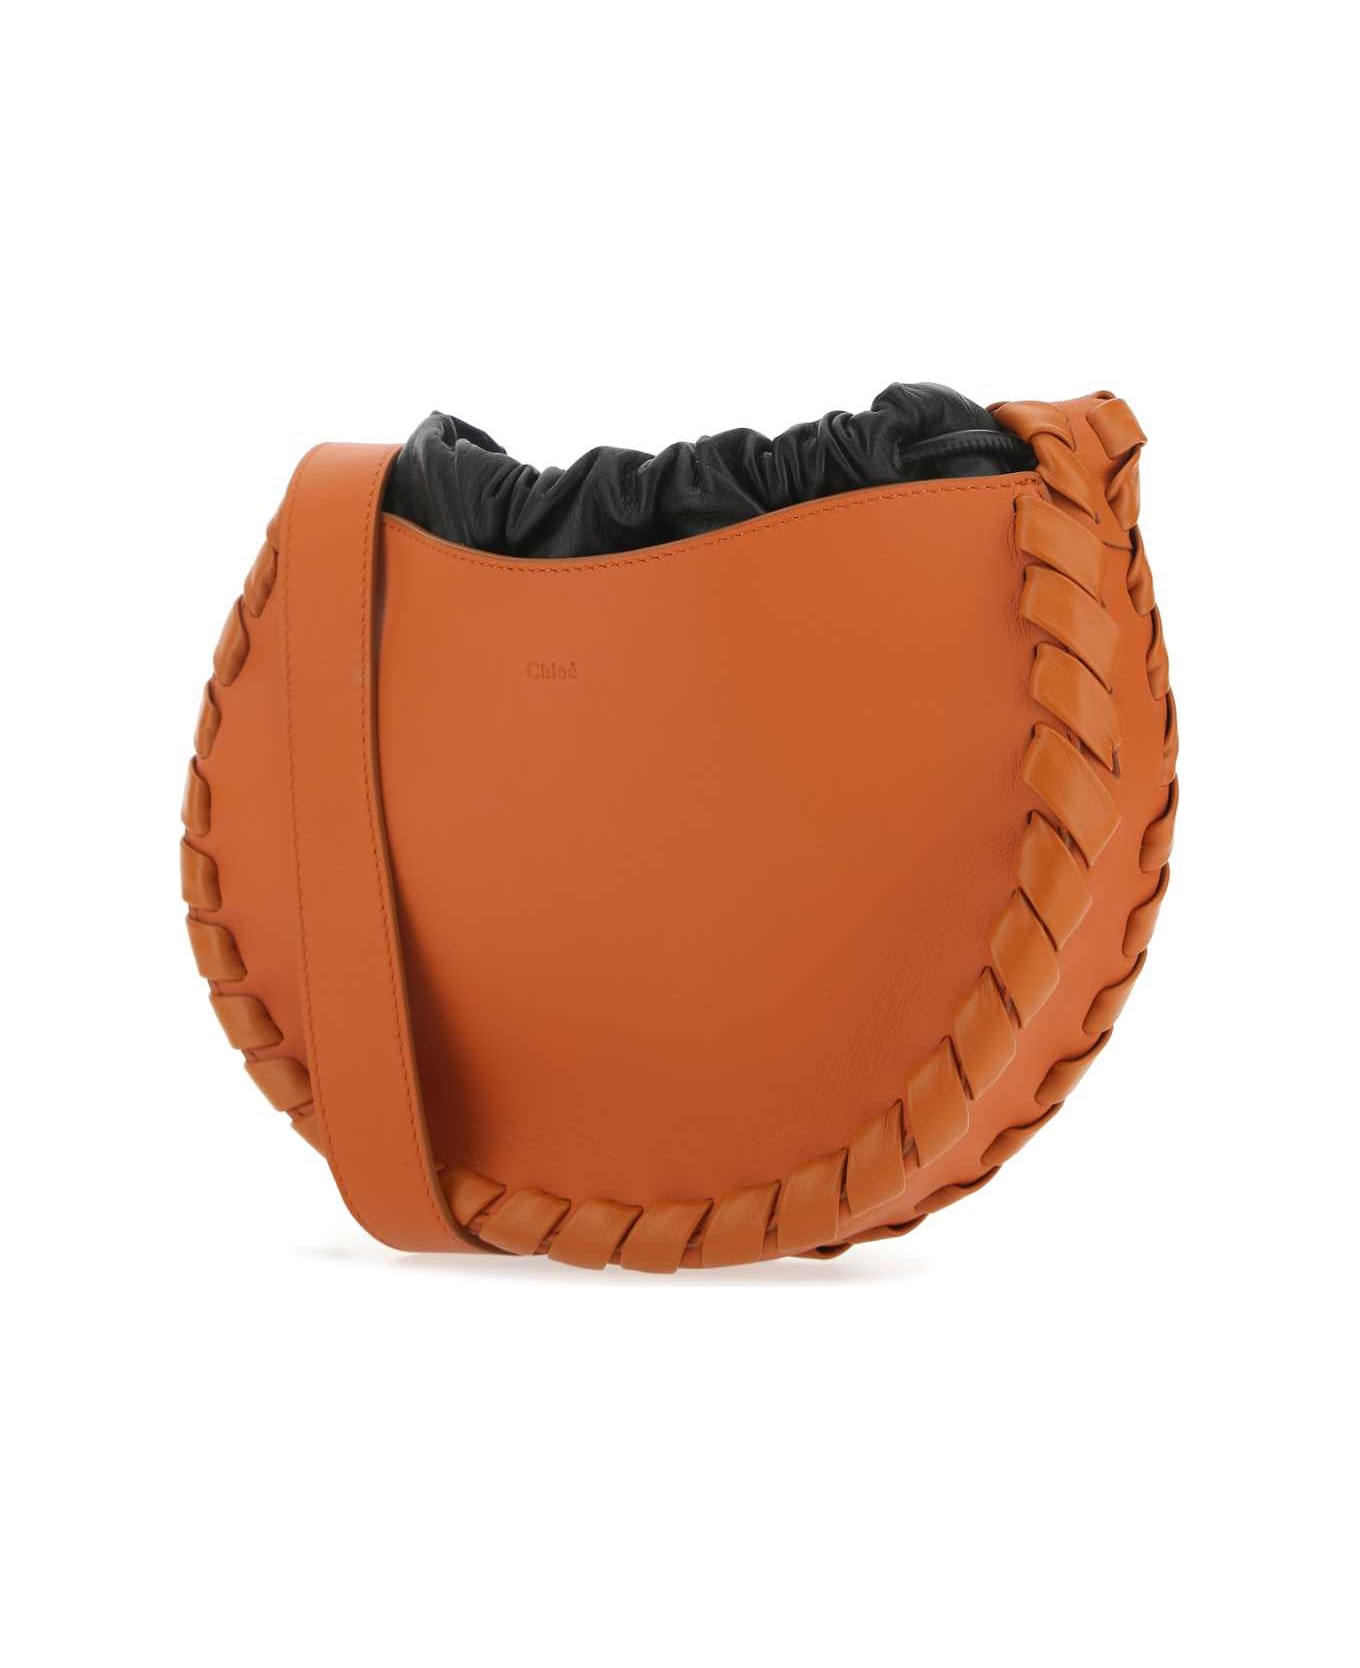 Chloé Dark Orange Leather Small Mate Crossbody Bag - 884